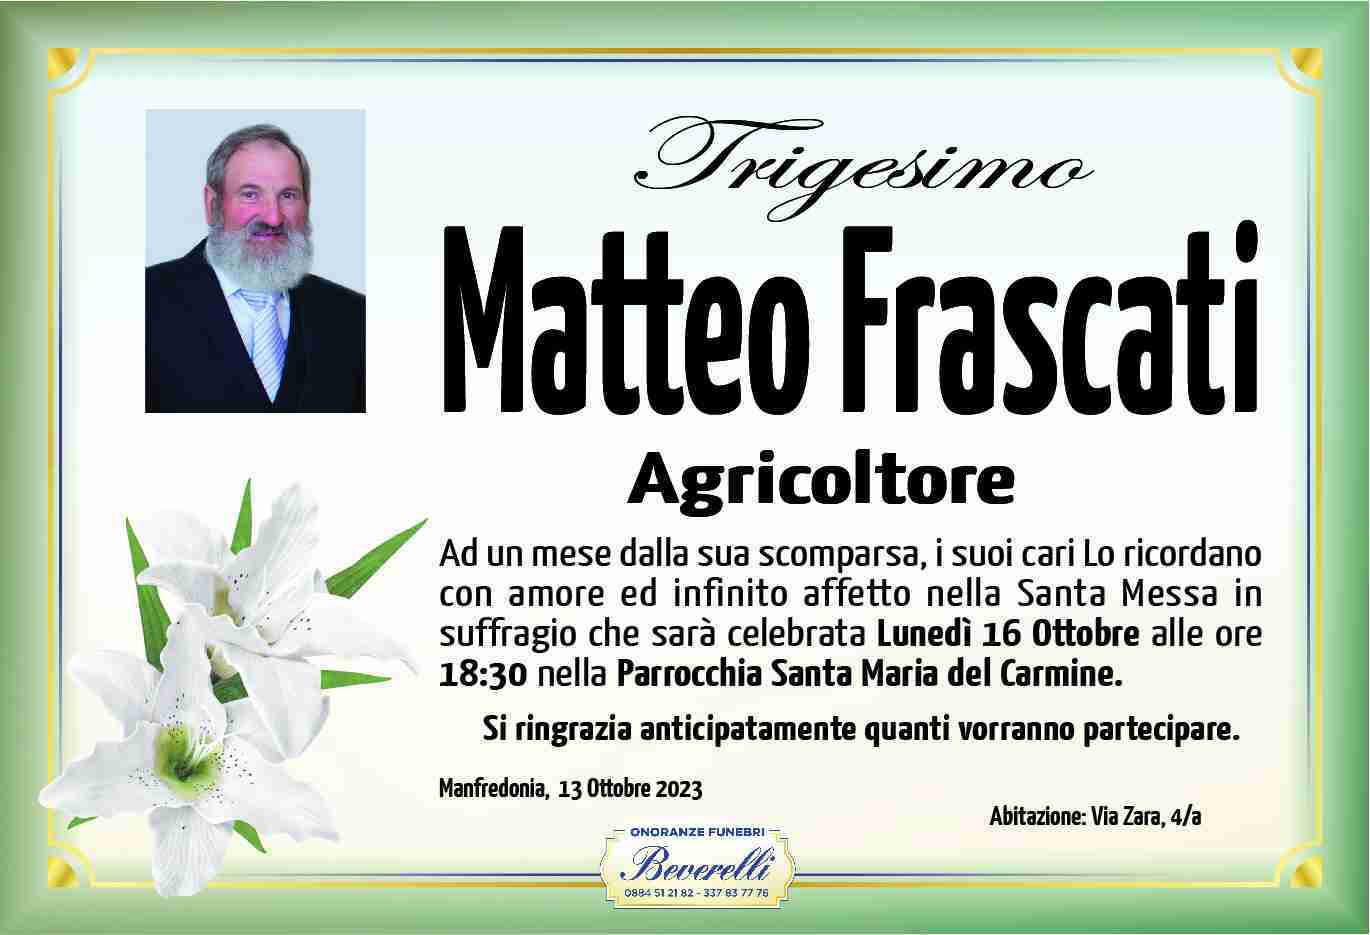 Matteo Frascati